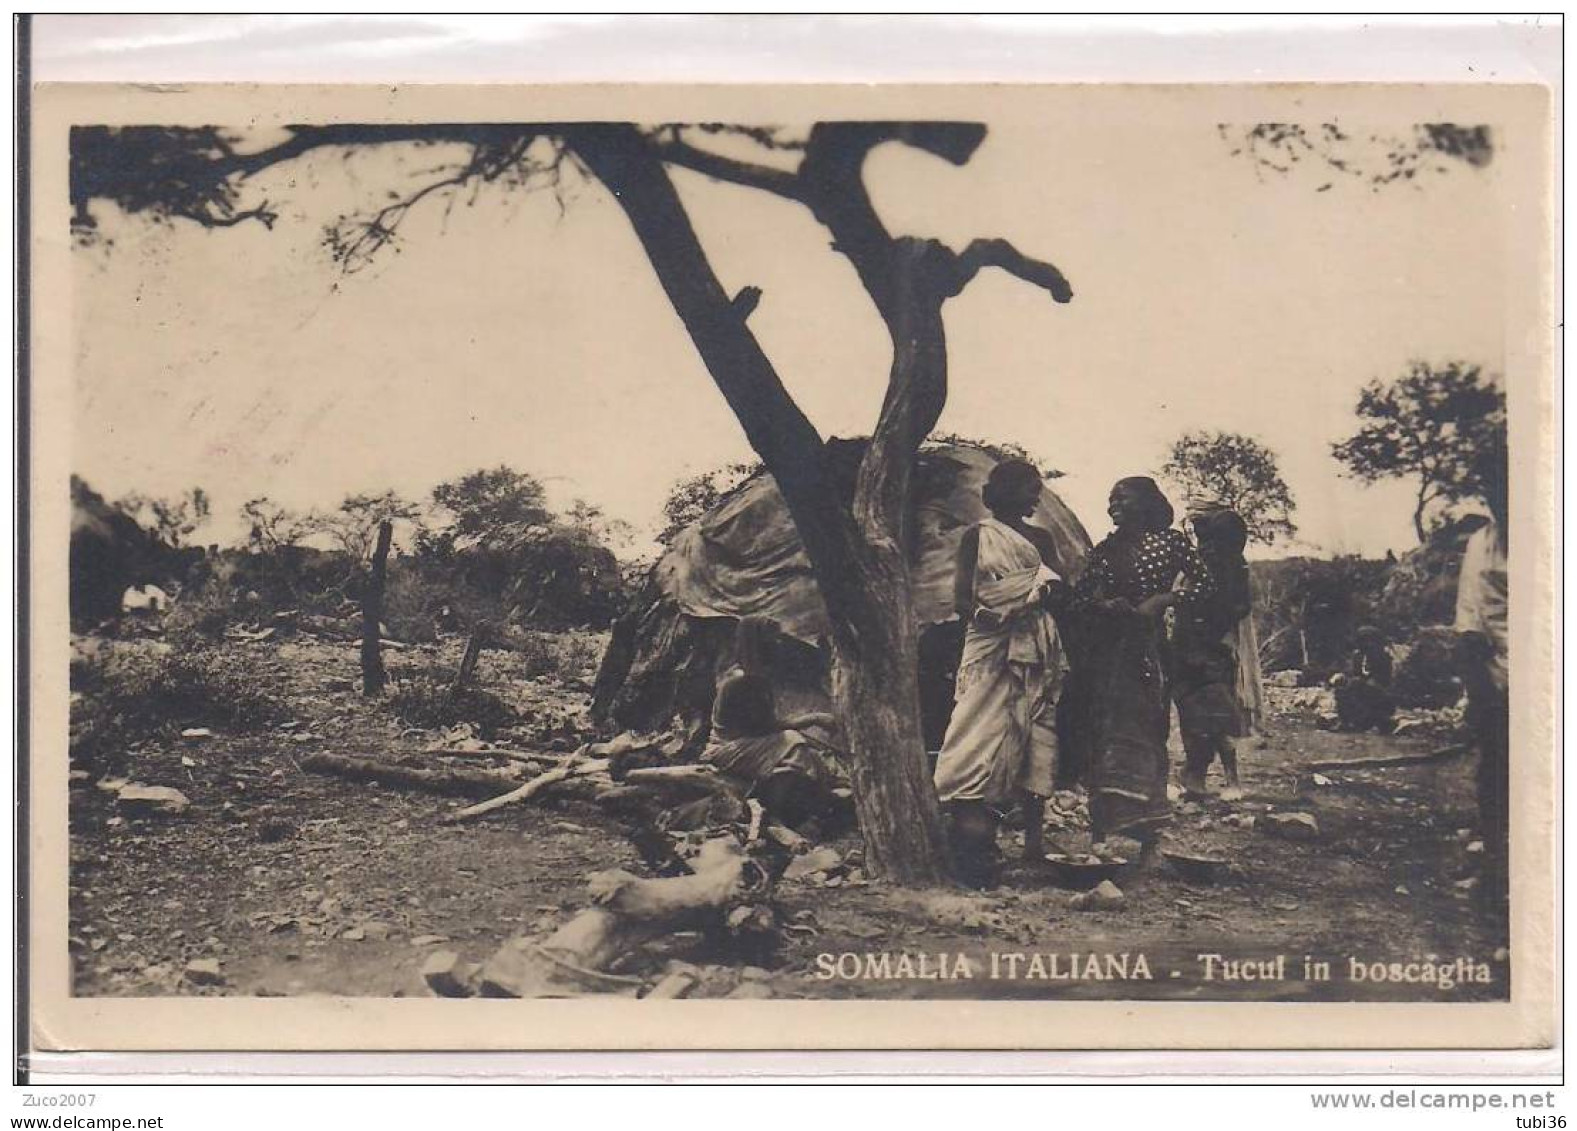 SOMALIA  ITALIANA - TUCUL  IN BOSCAGLIA  - B/N VIAGGIATA  2/11/1930 - TIMBRO POSTE MOGADISCIO - Somalia